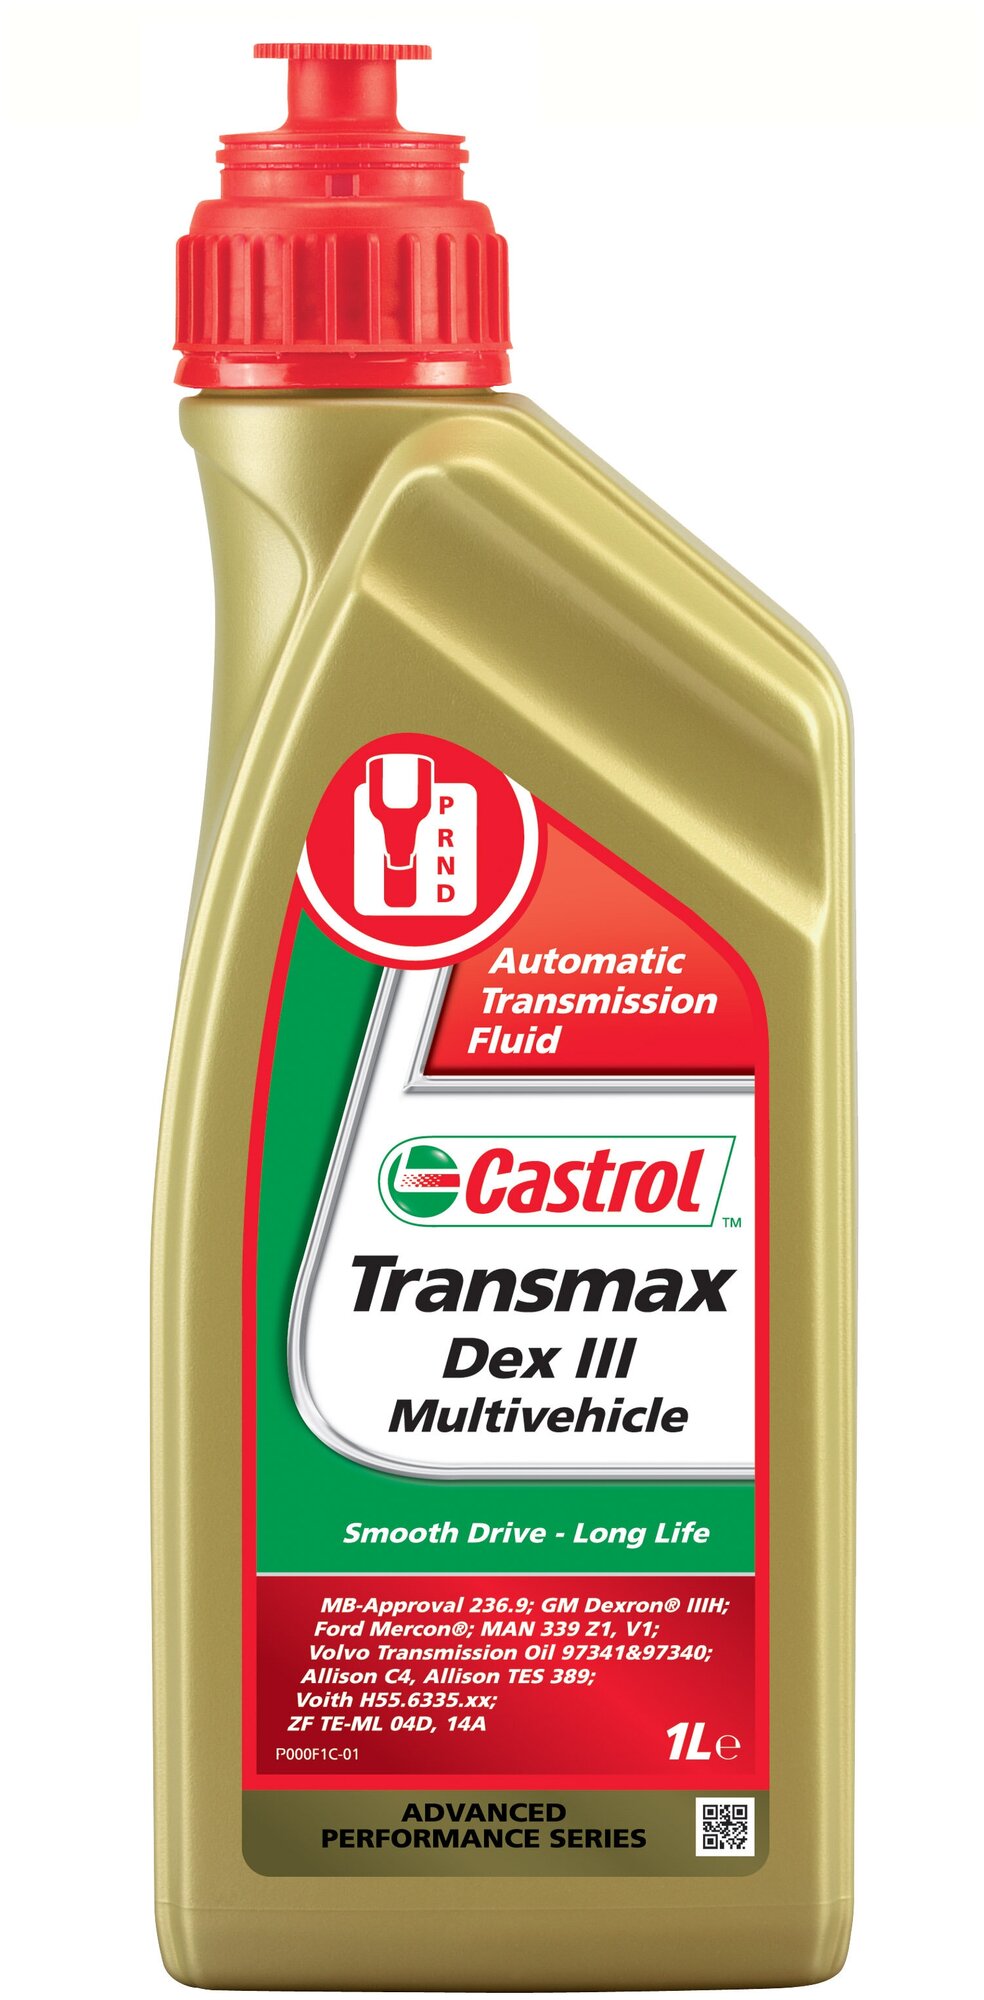   Castrol Transmax Dex III Multivehicle, 1 